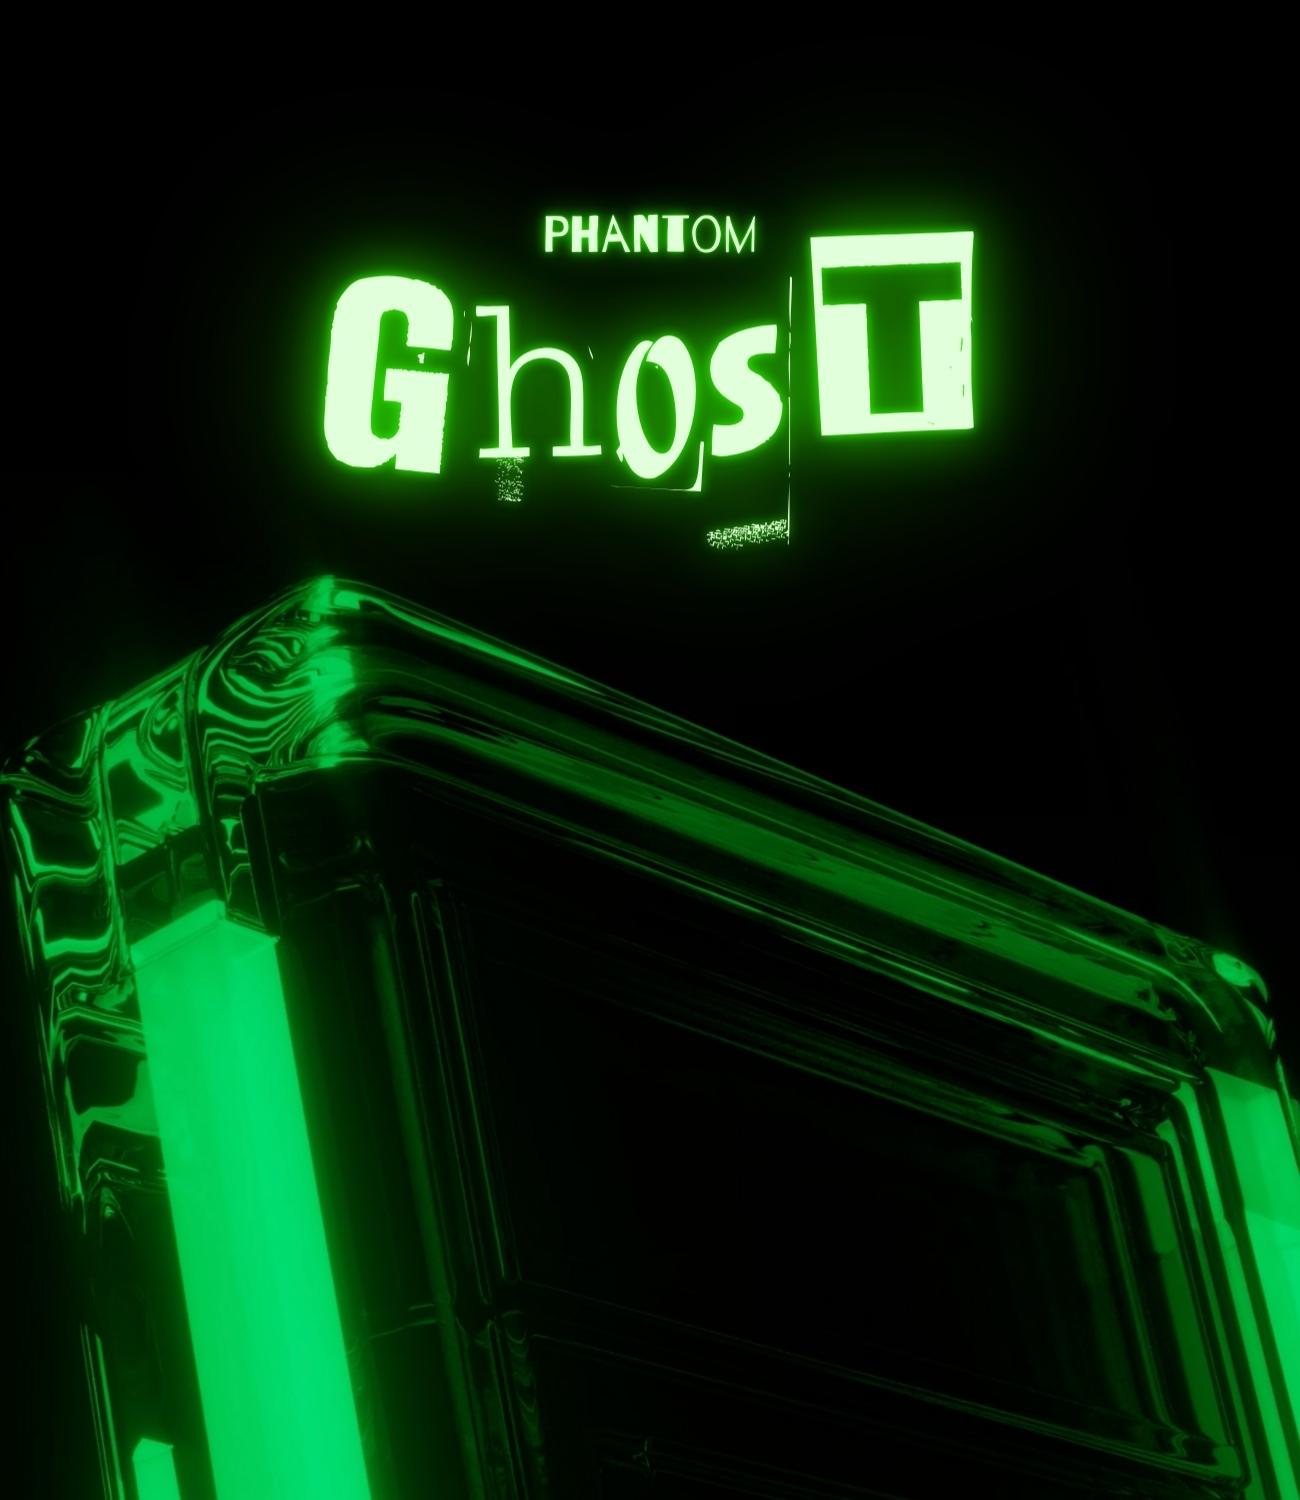 Phantom Ghost Glow in the dark graded card display mobile